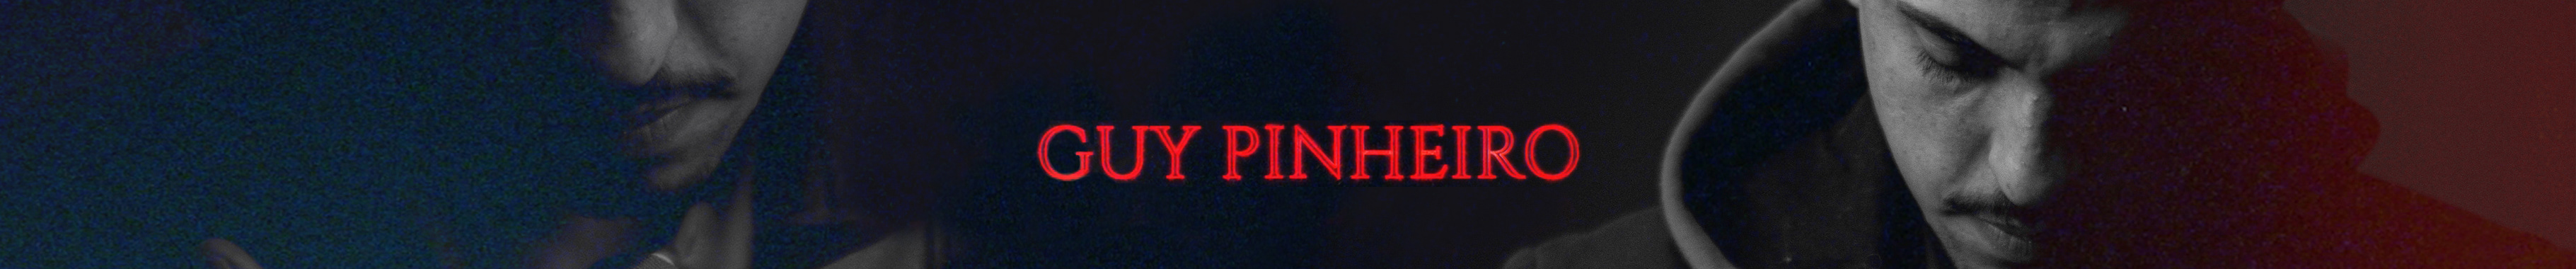 Guy Pinheiro's profile banner